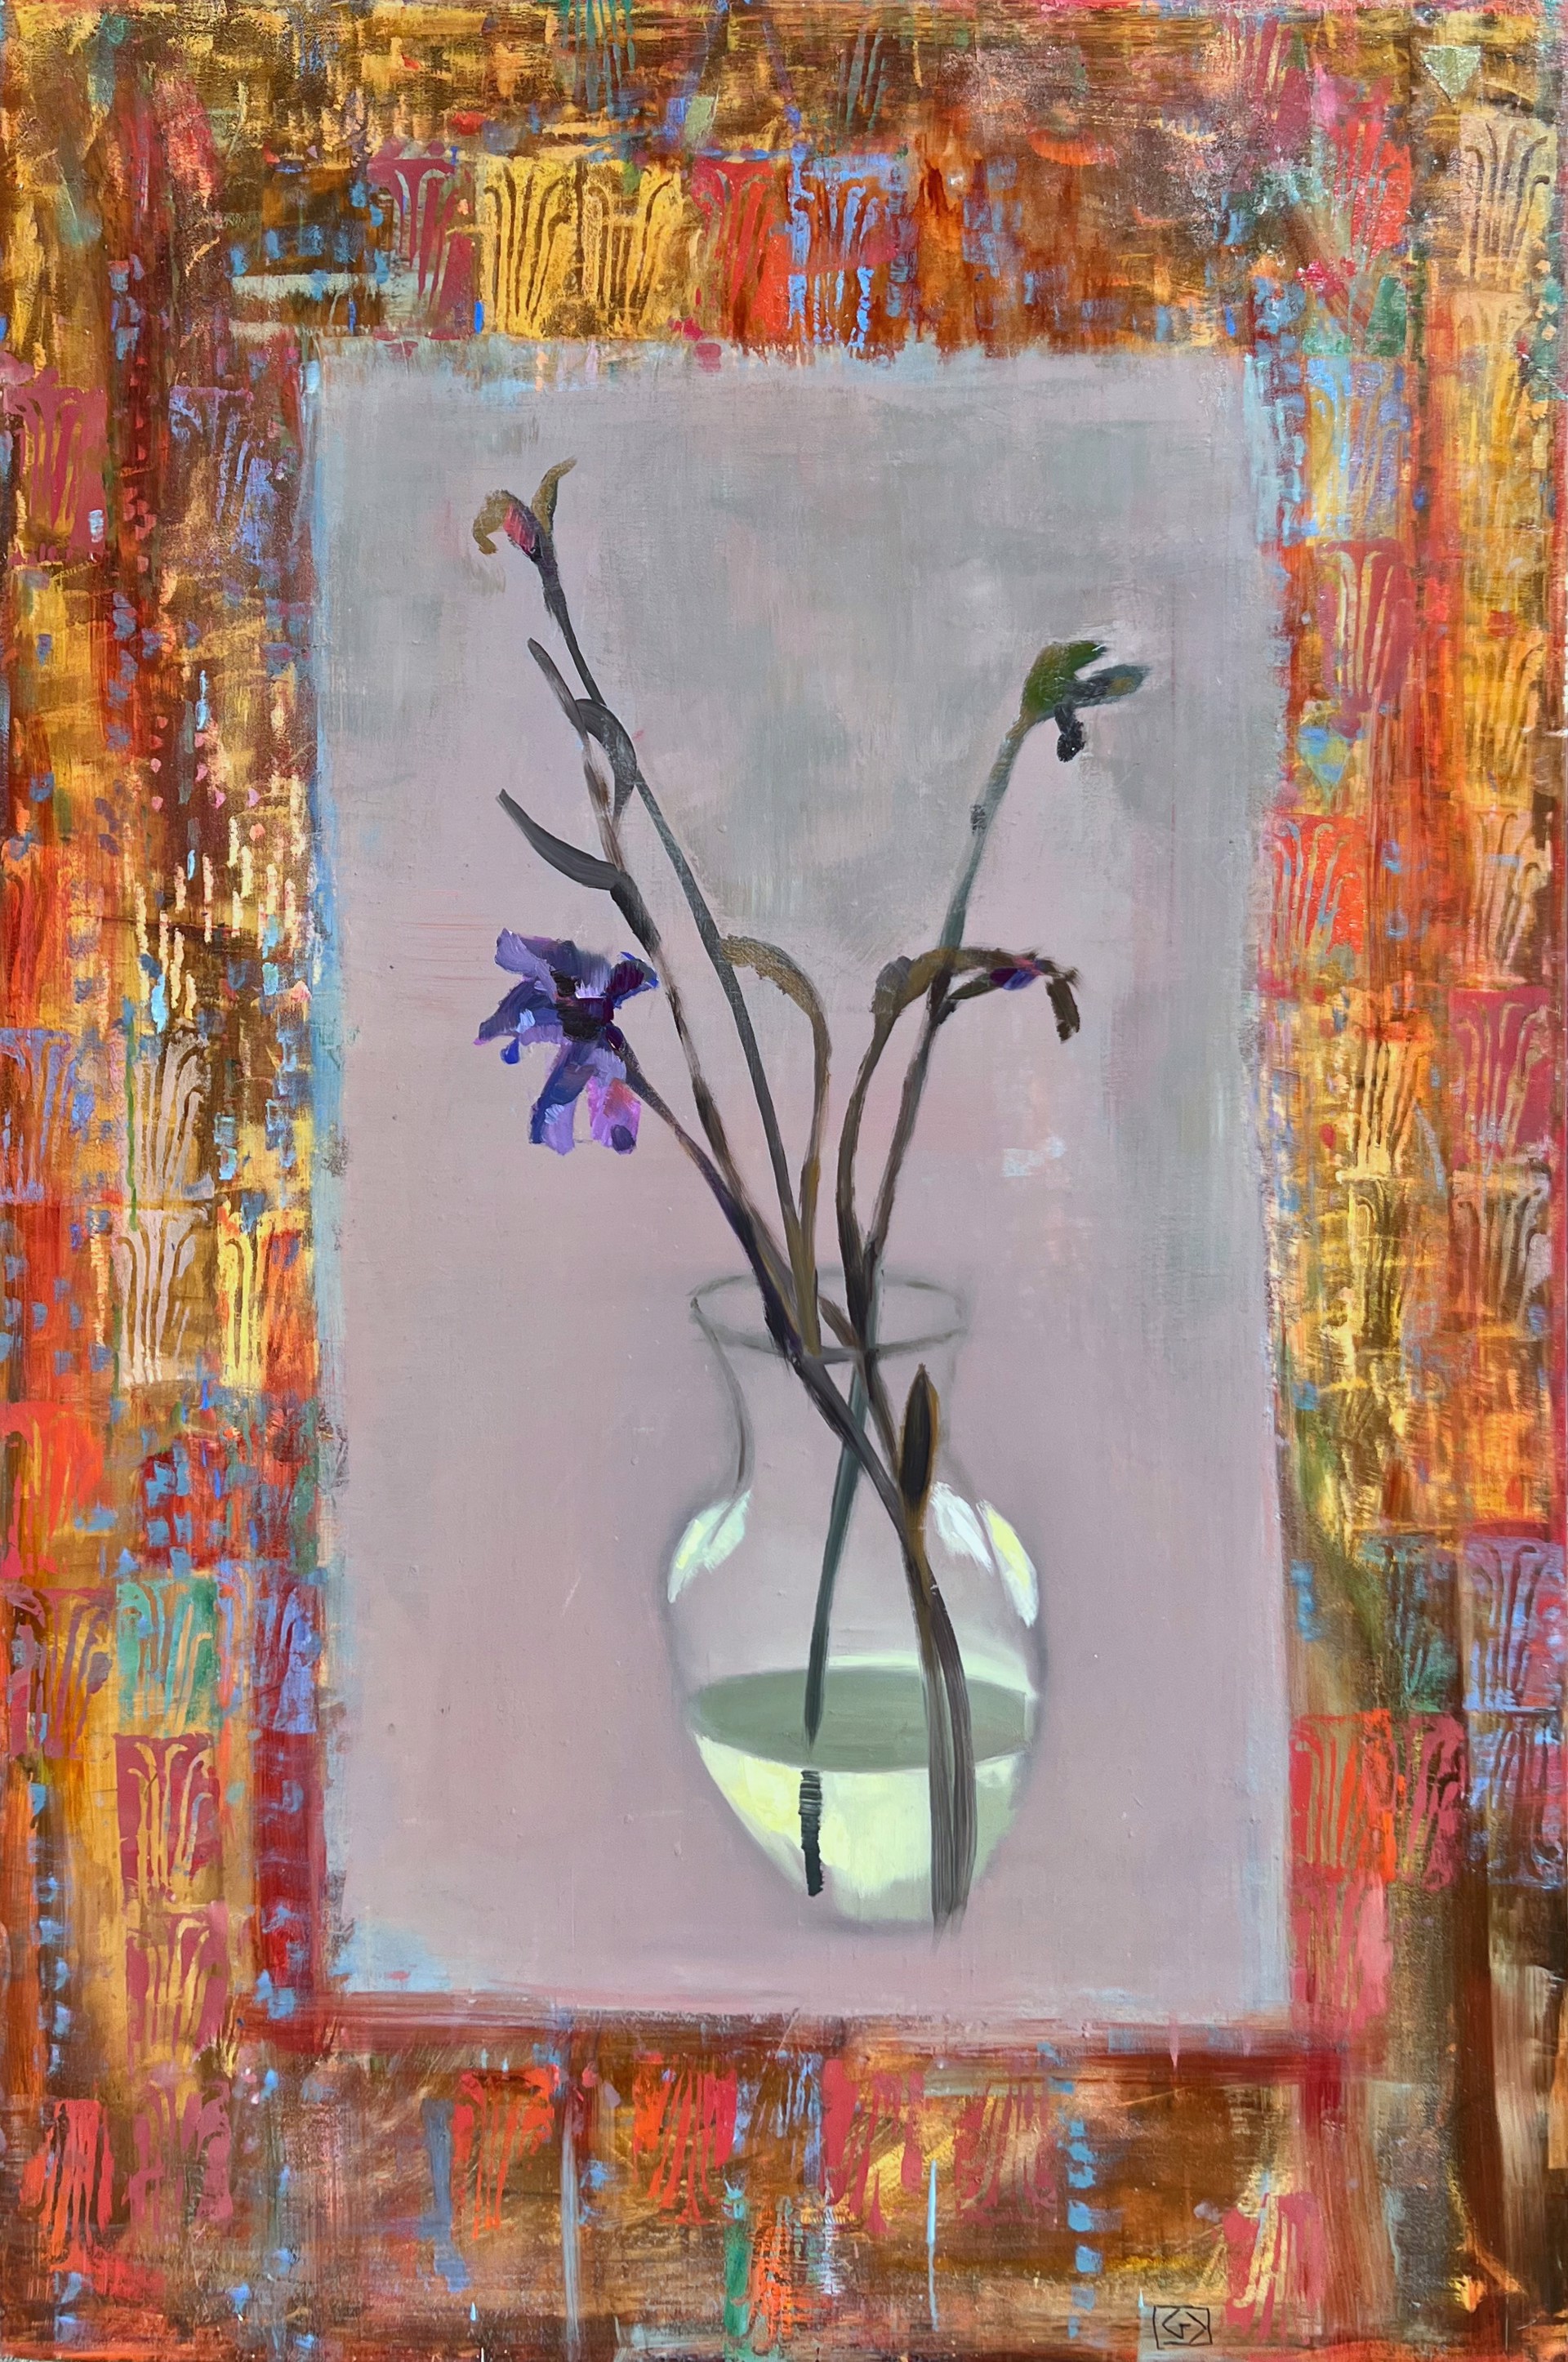 Vase of Flowers by Greg Decker